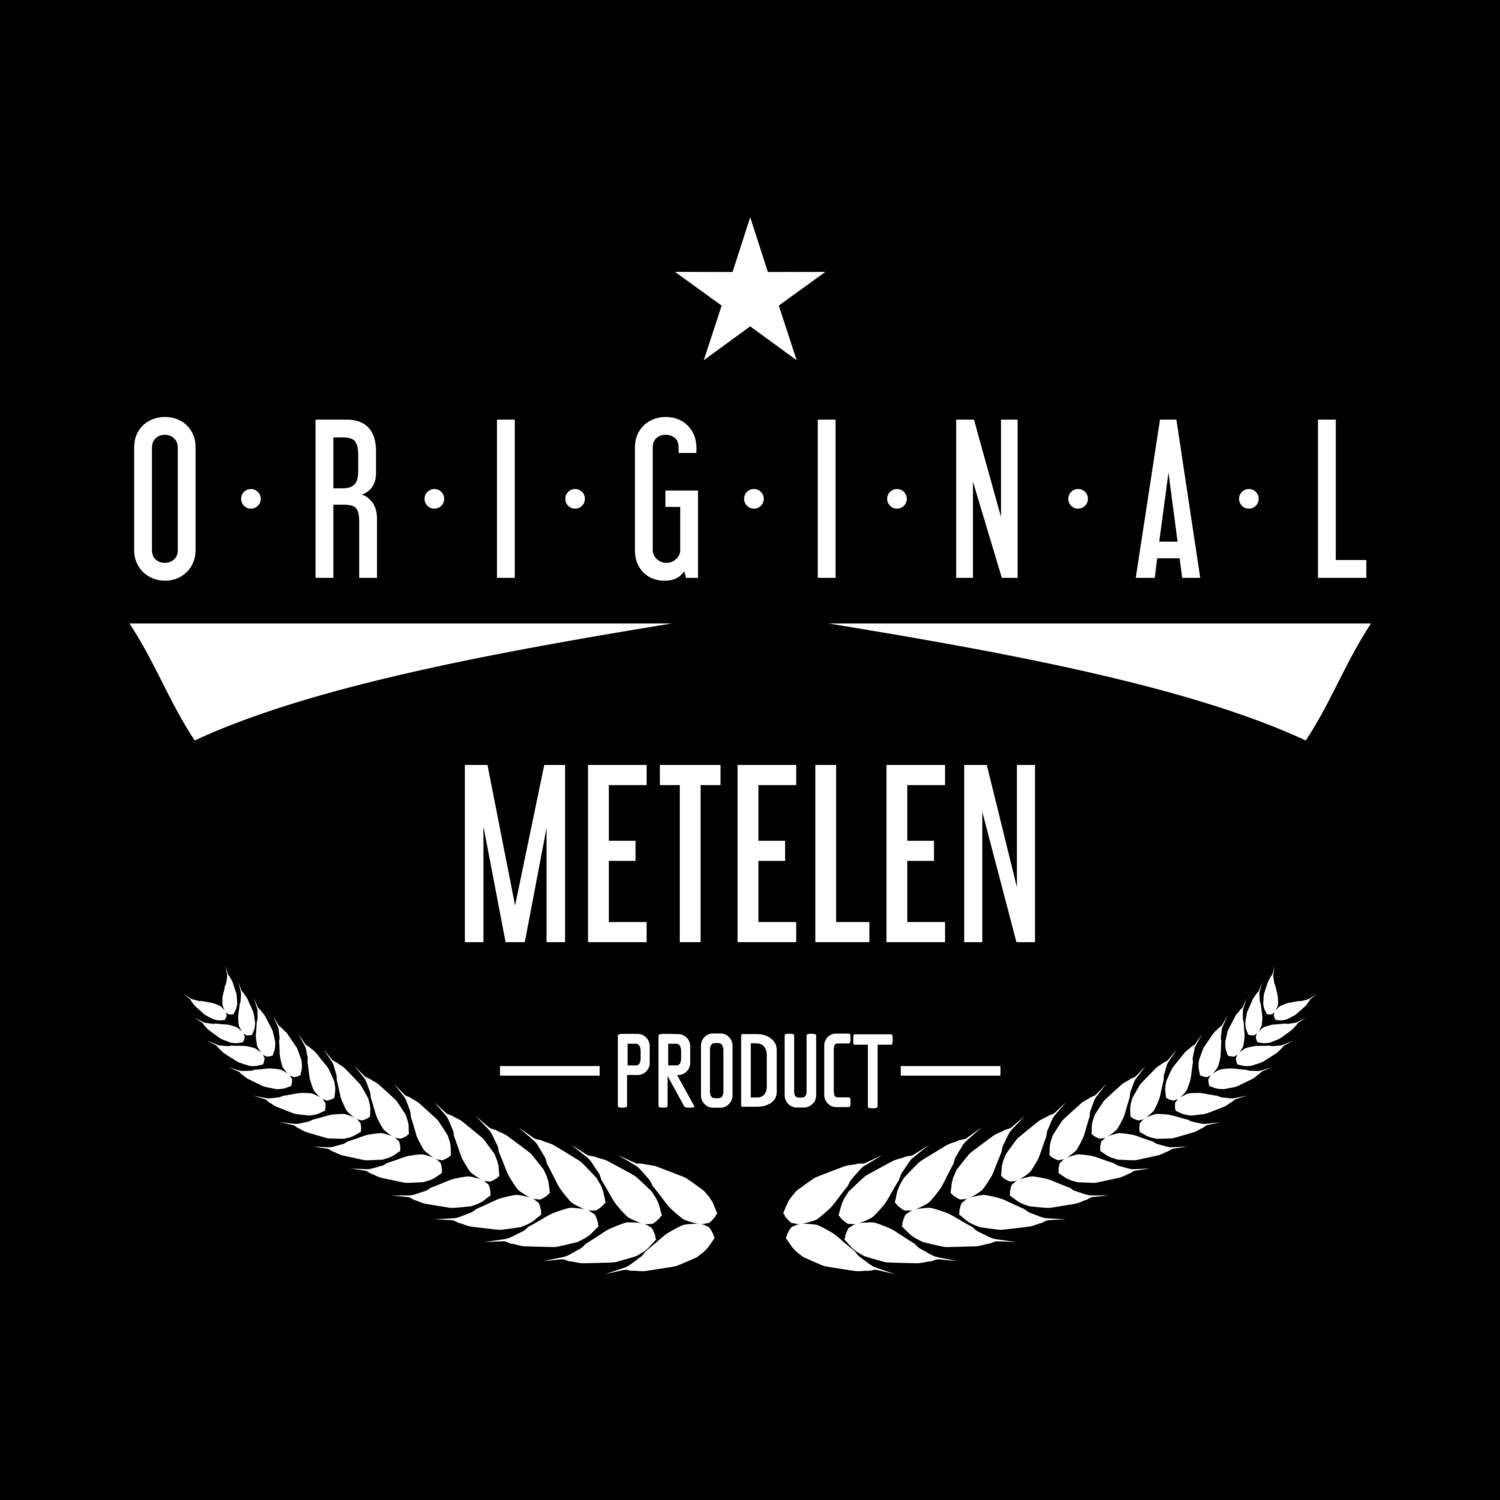 Metelen T-Shirt »Original Product«